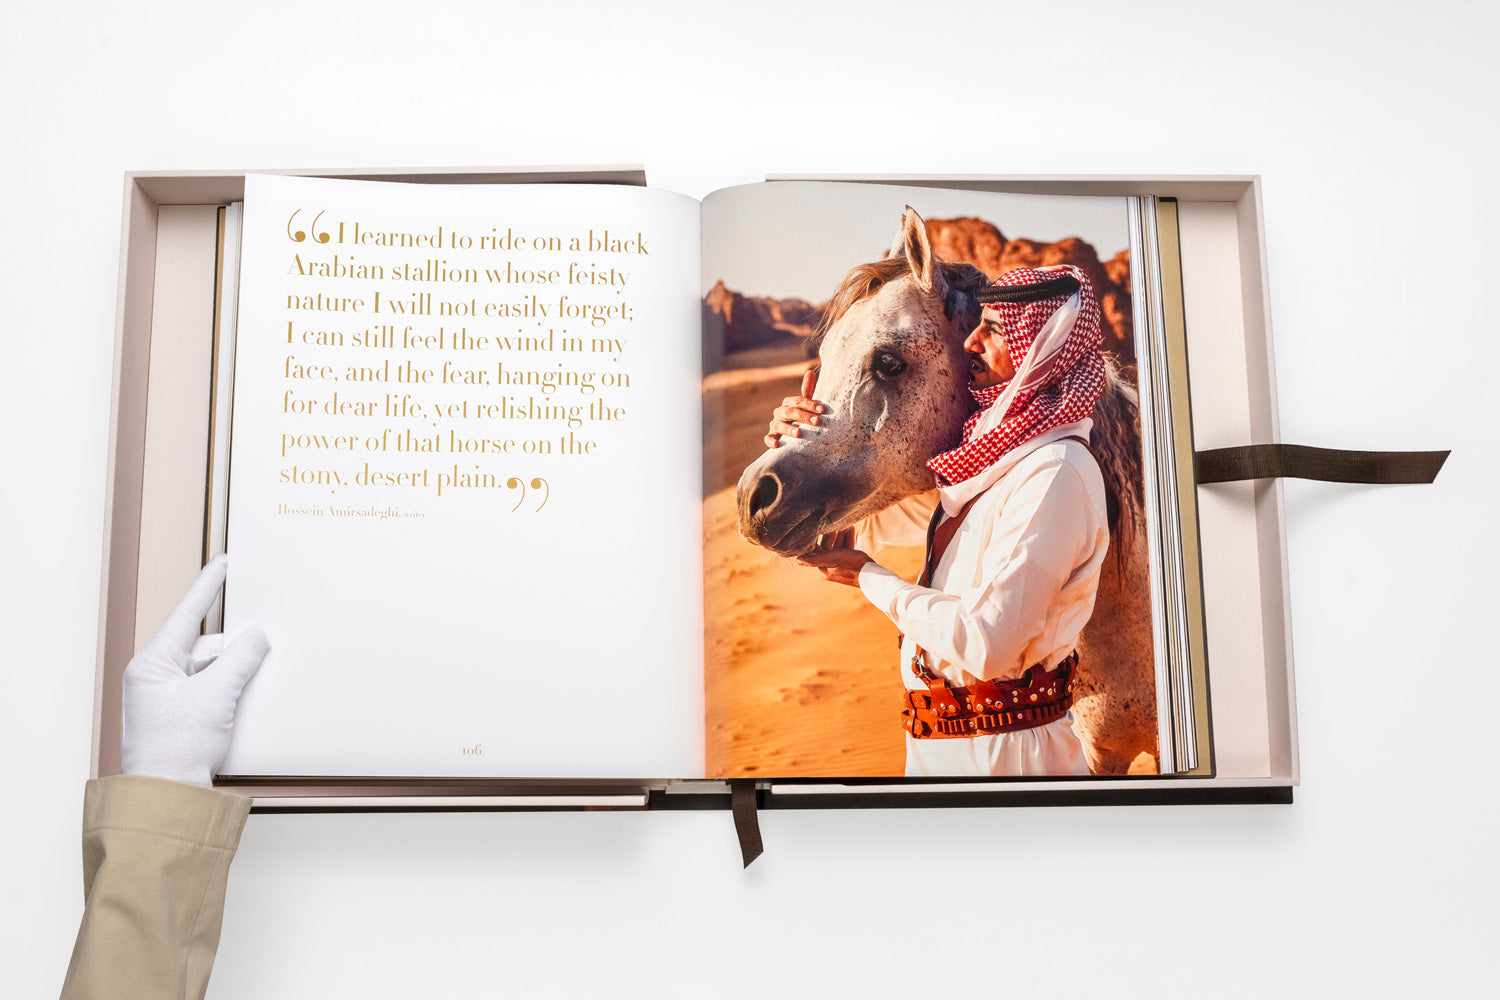 Assouline | Horses From Saudi Arabia